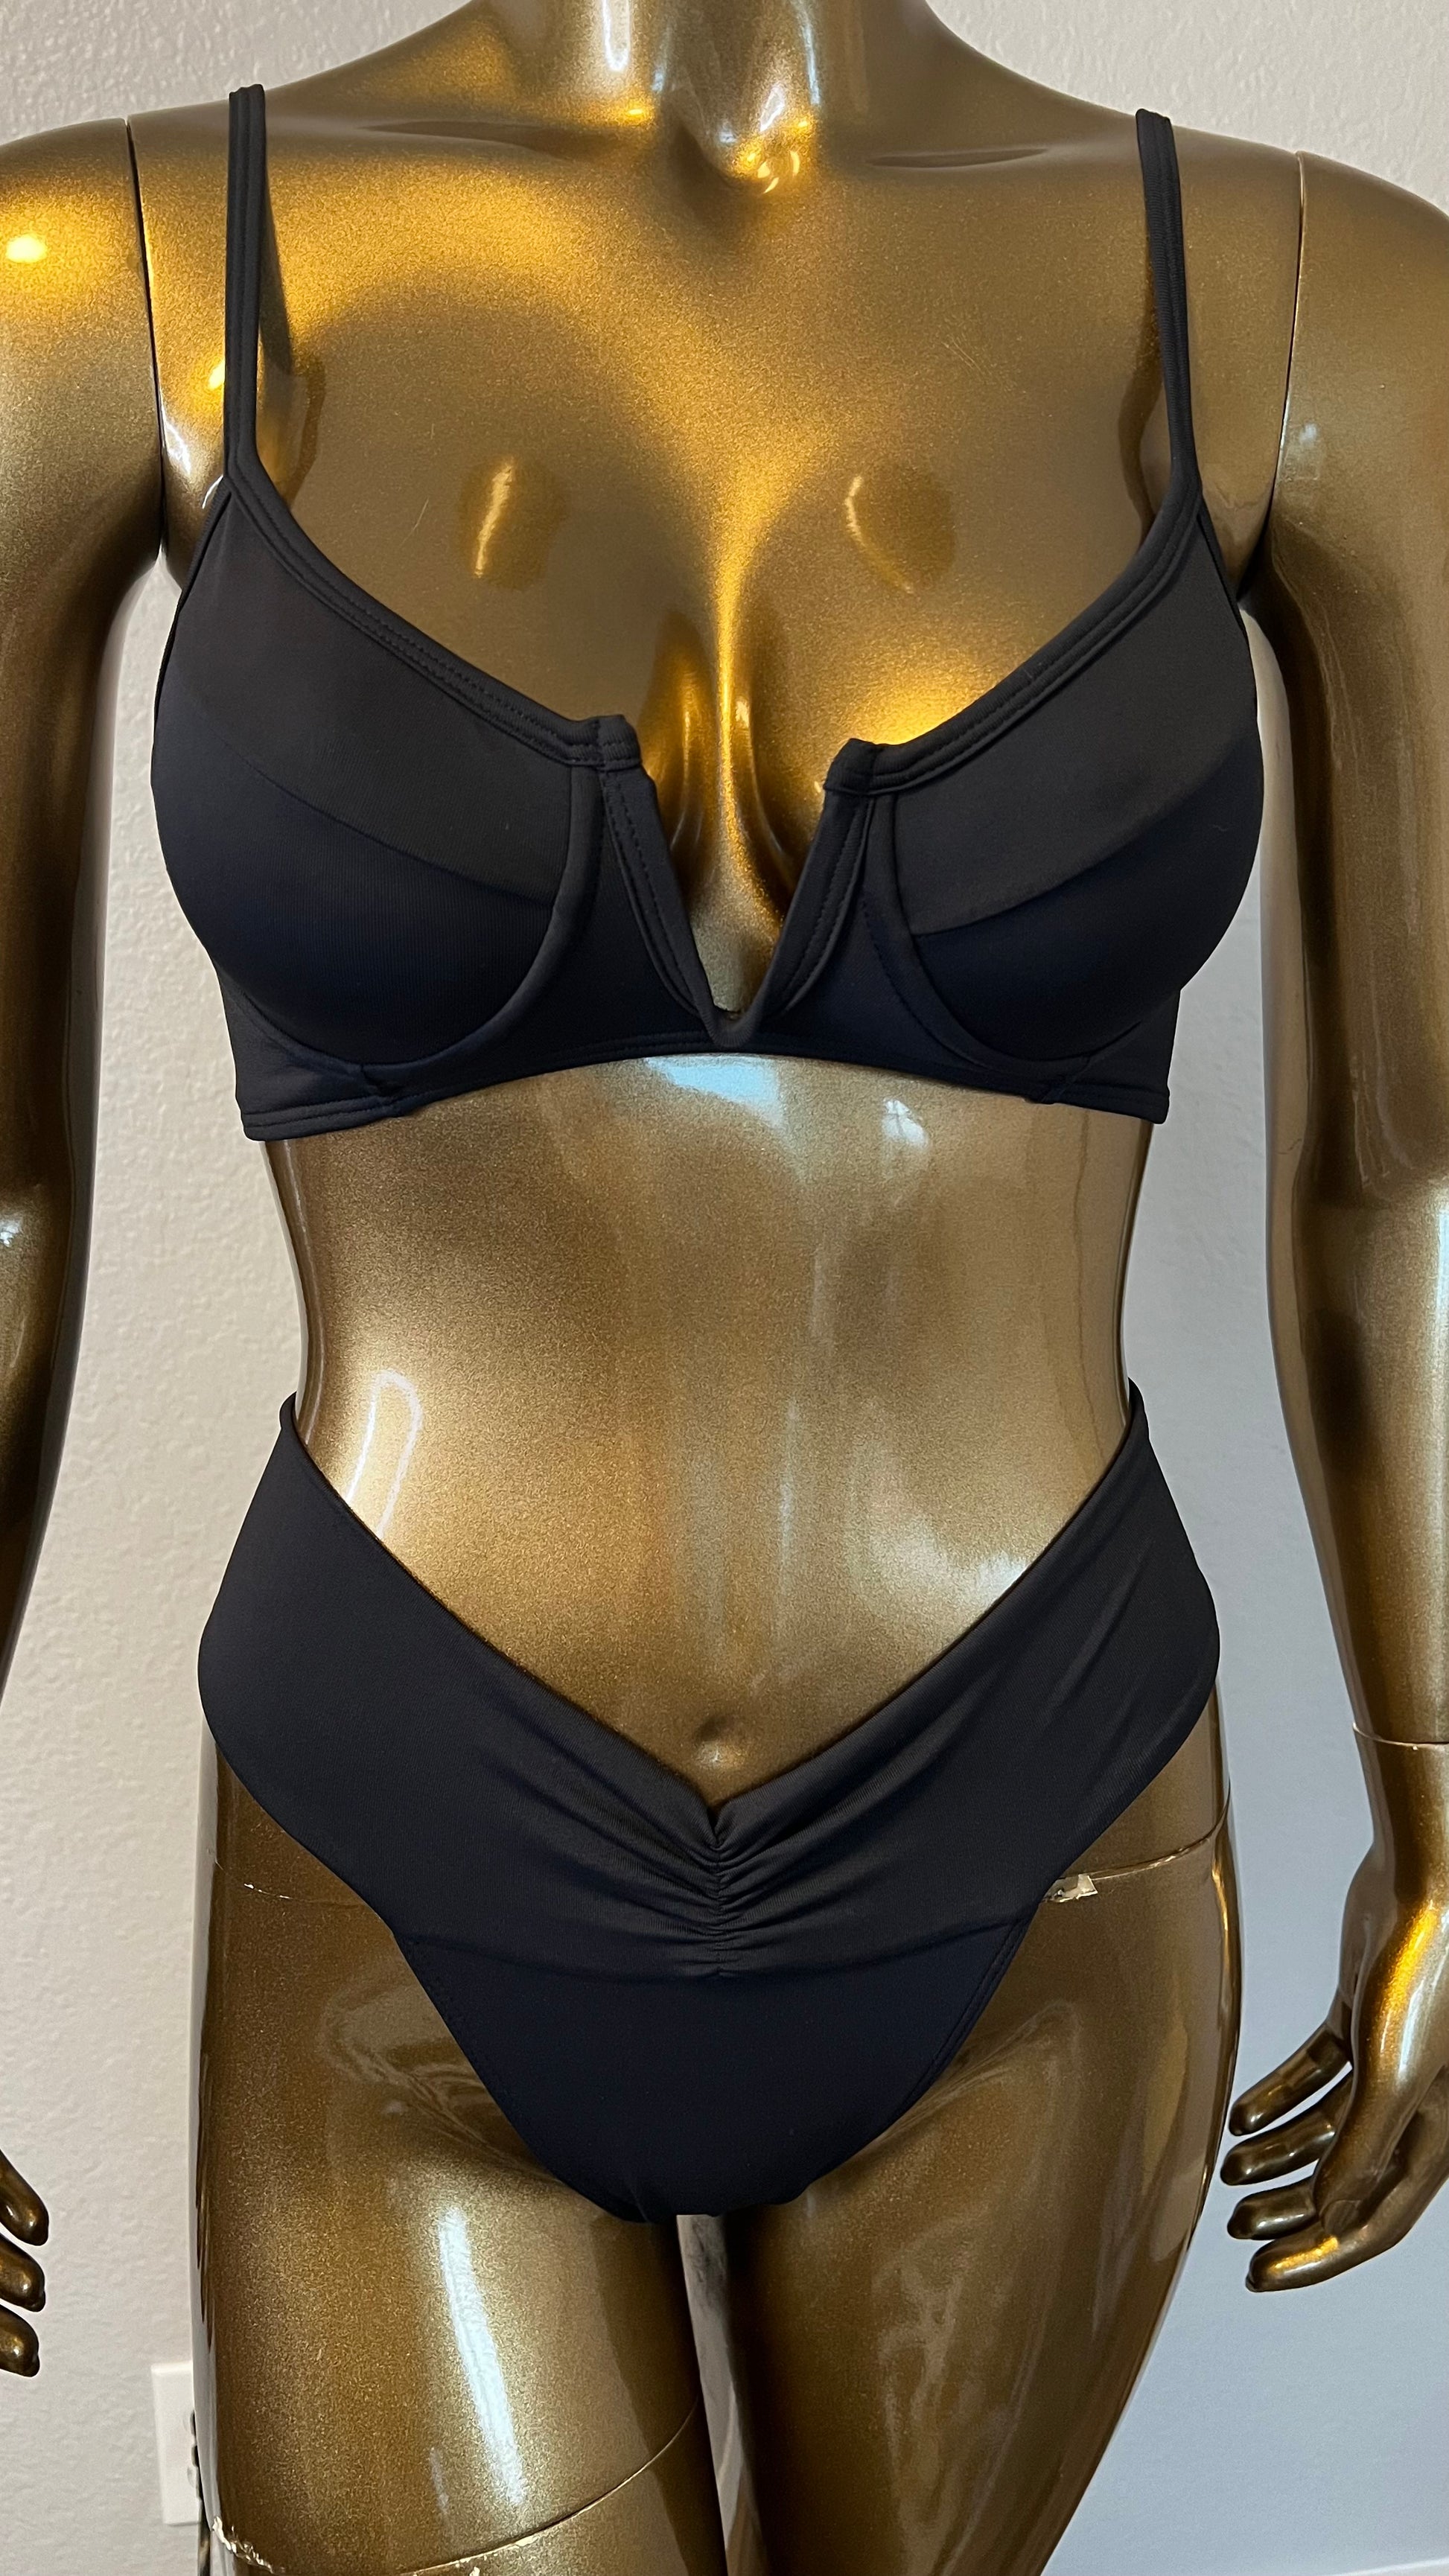 Textured Black Push-Up Balconette Bikini Top - Top Cotele-Preto  Balconet-Pushup